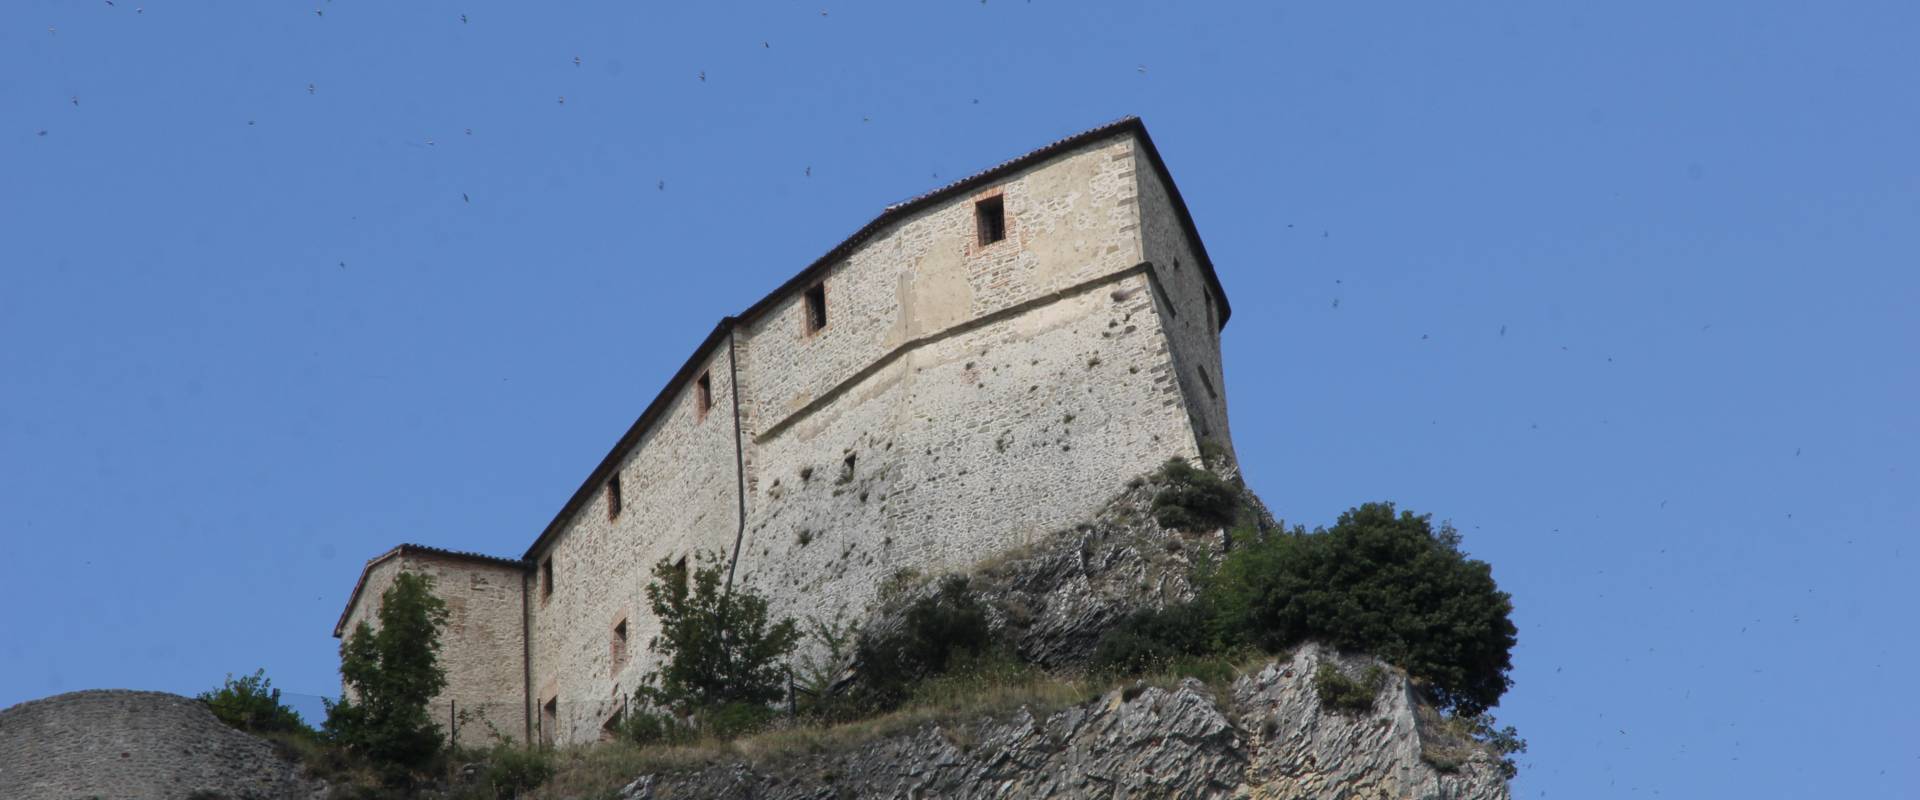 San Leo, forte di San Leo (03) photo by Gianni Careddu